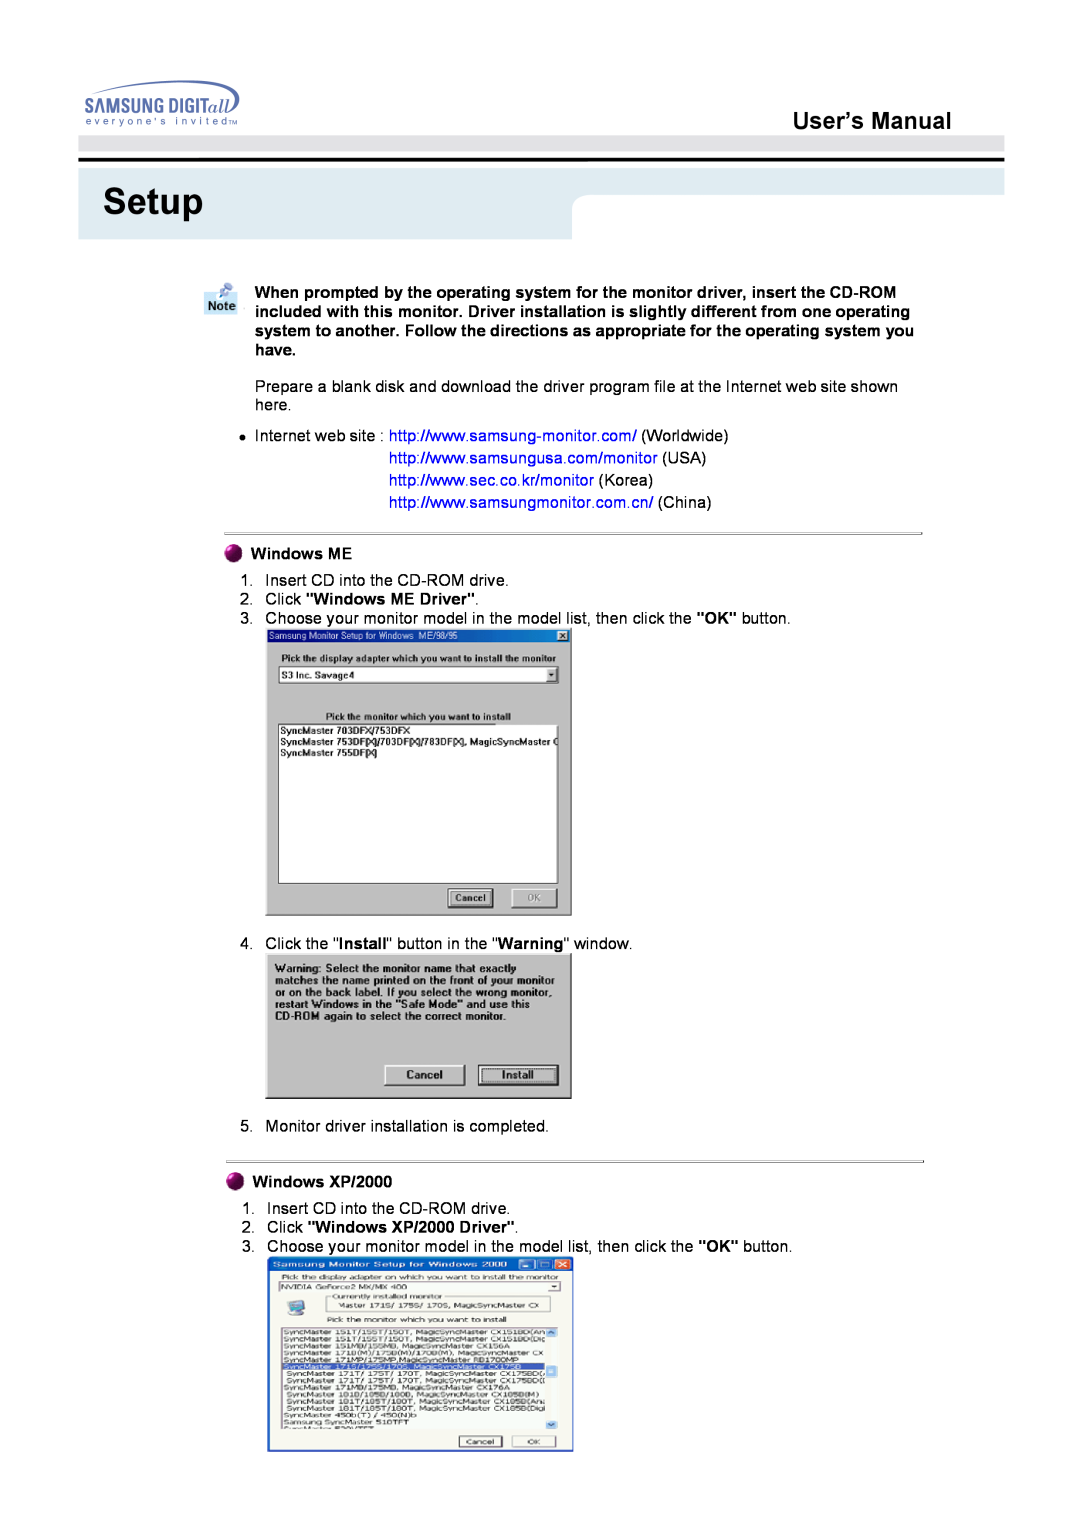 Samsung 172S manual Setup, User’s Manual, Click Windows ME Driver, Click Windows XP/2000 Driver 